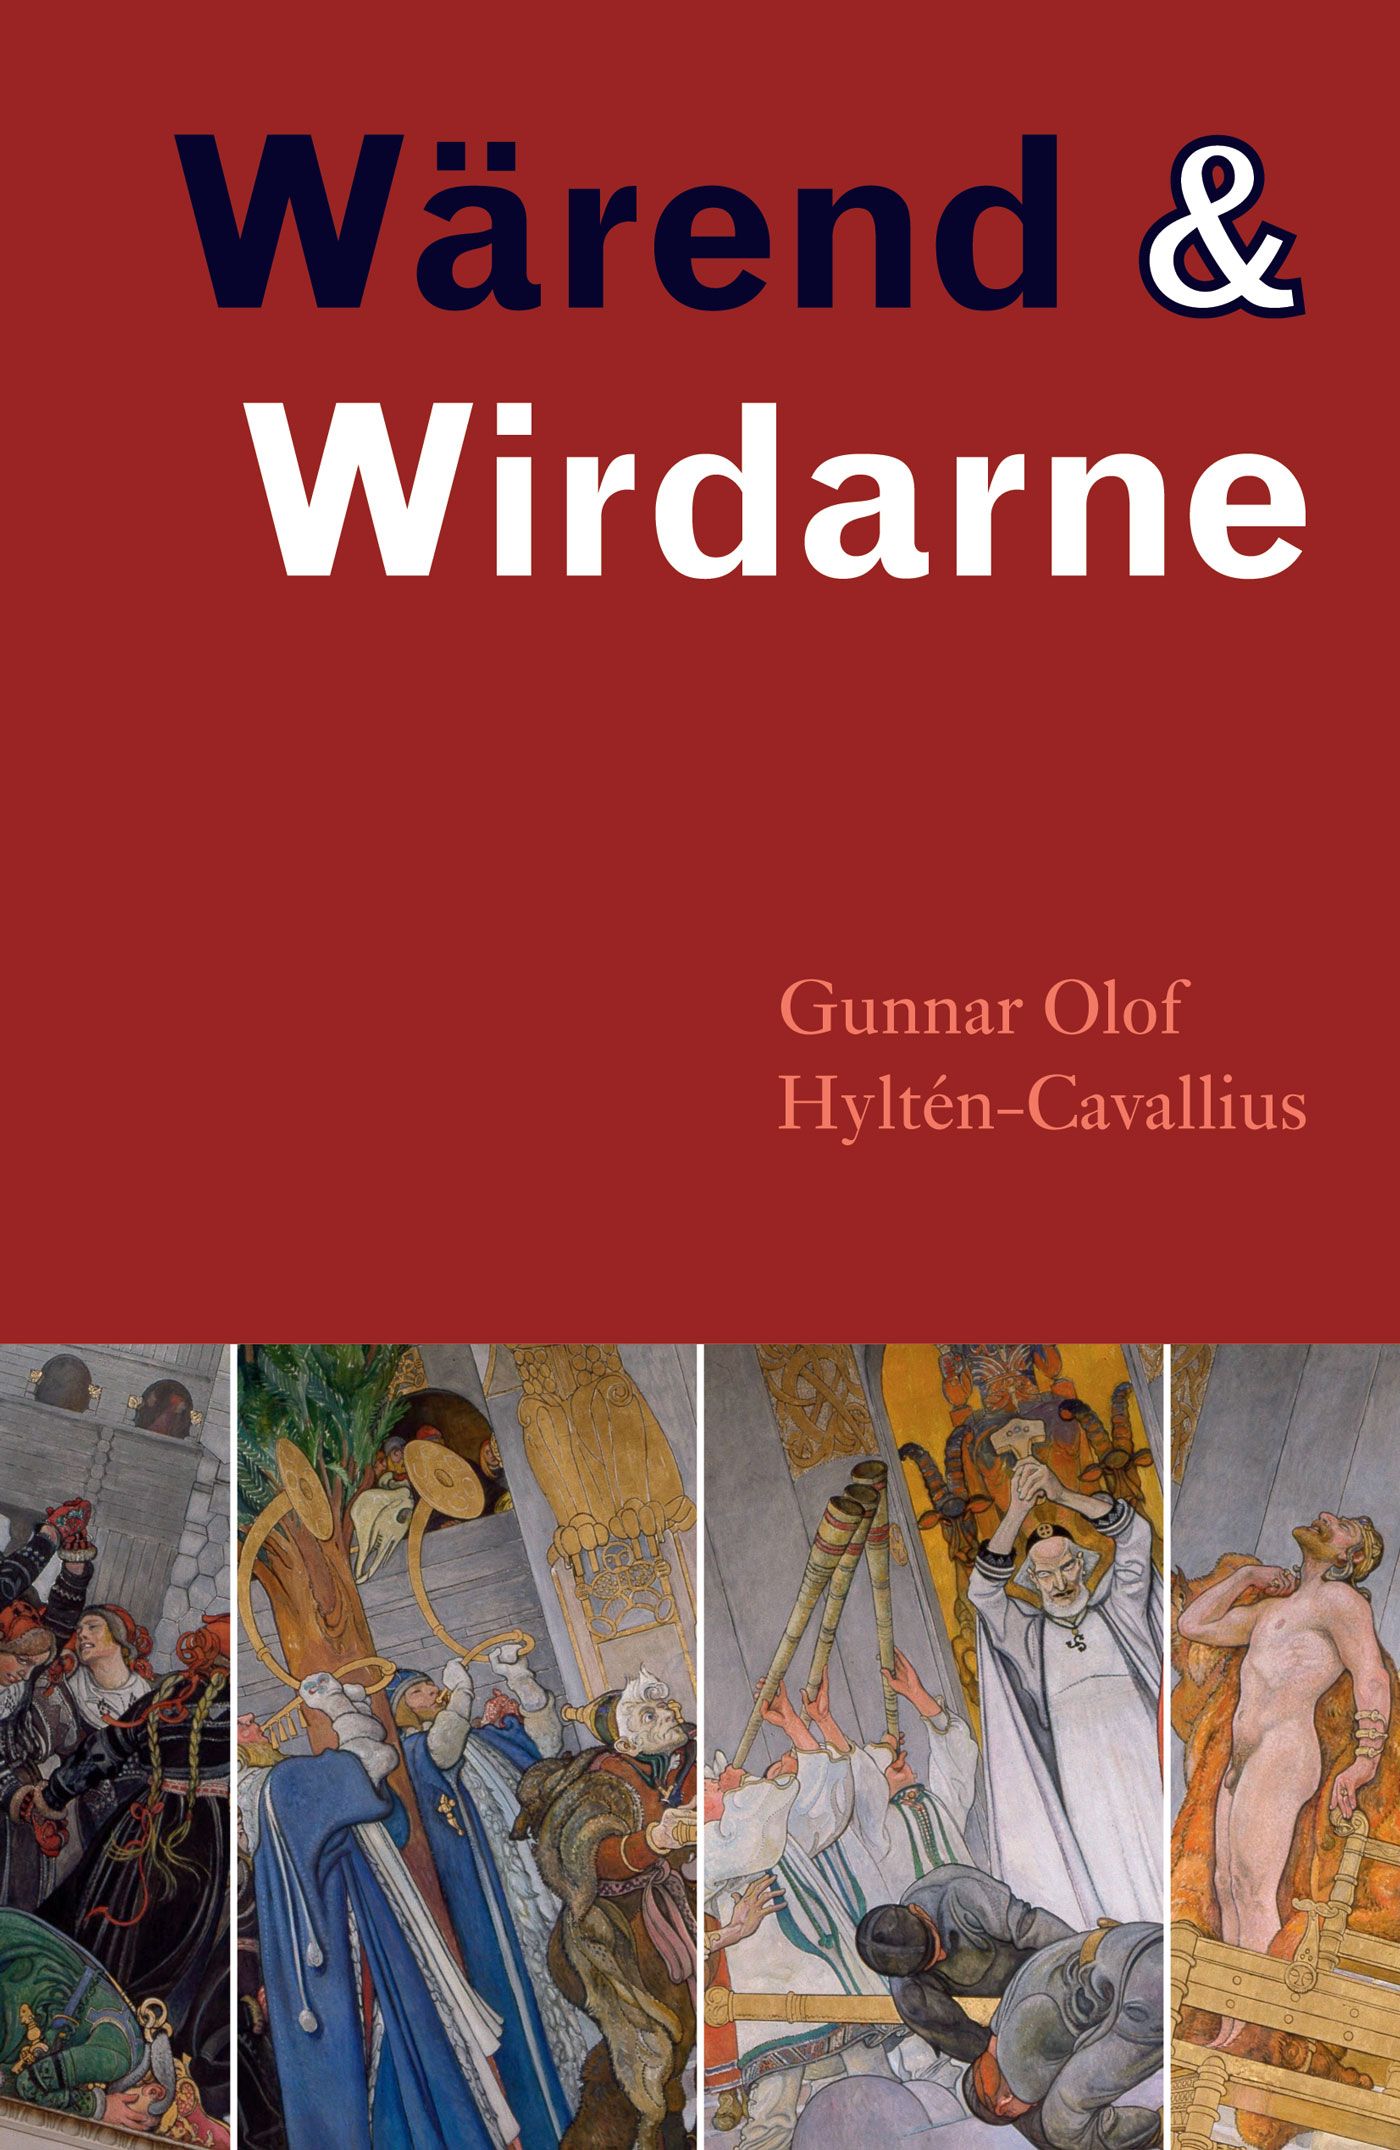 Wärend och wirdarne, eBook by Gunnar Olof Hyltén-Cavallius